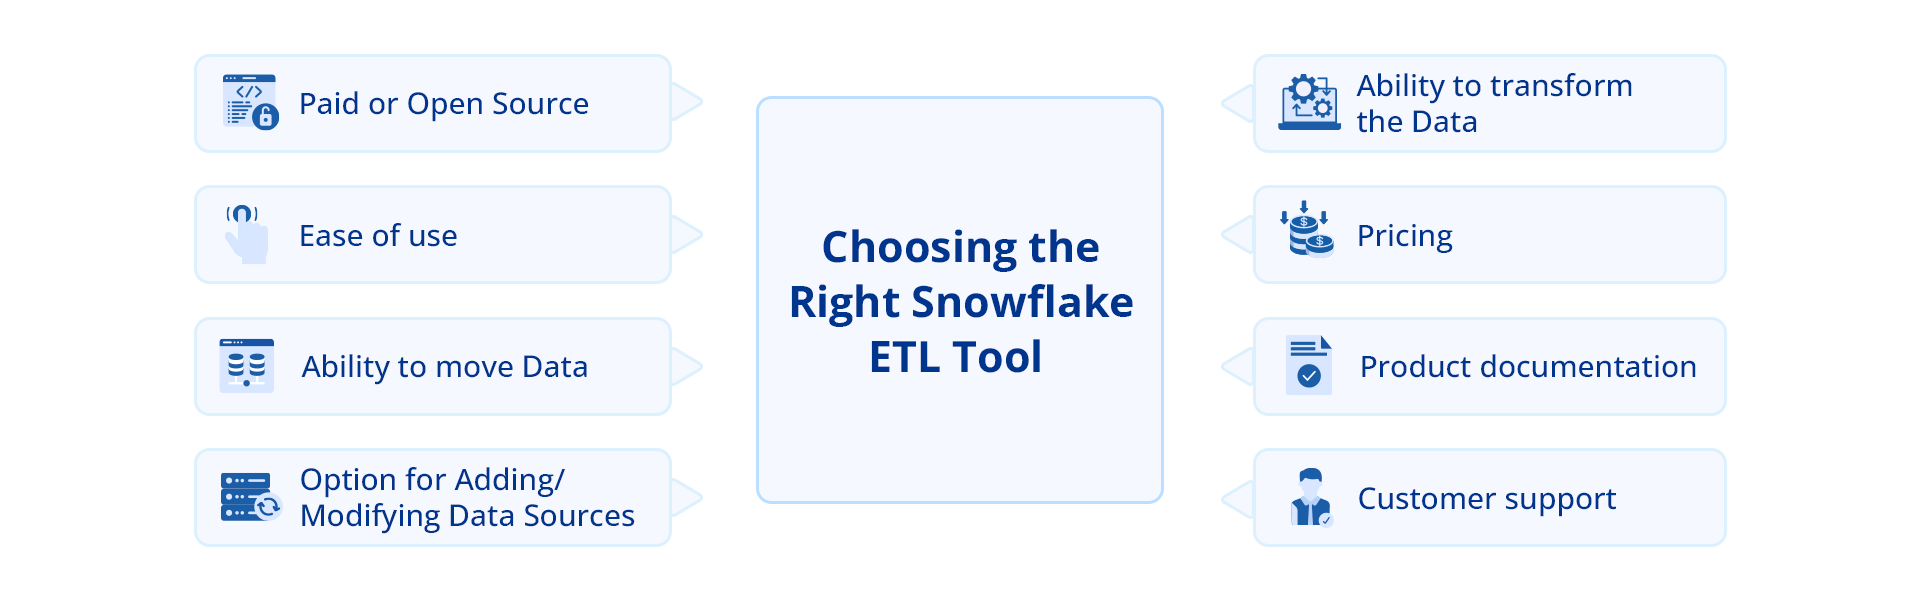 Factos to consider when choosing the snowflake ETL tool